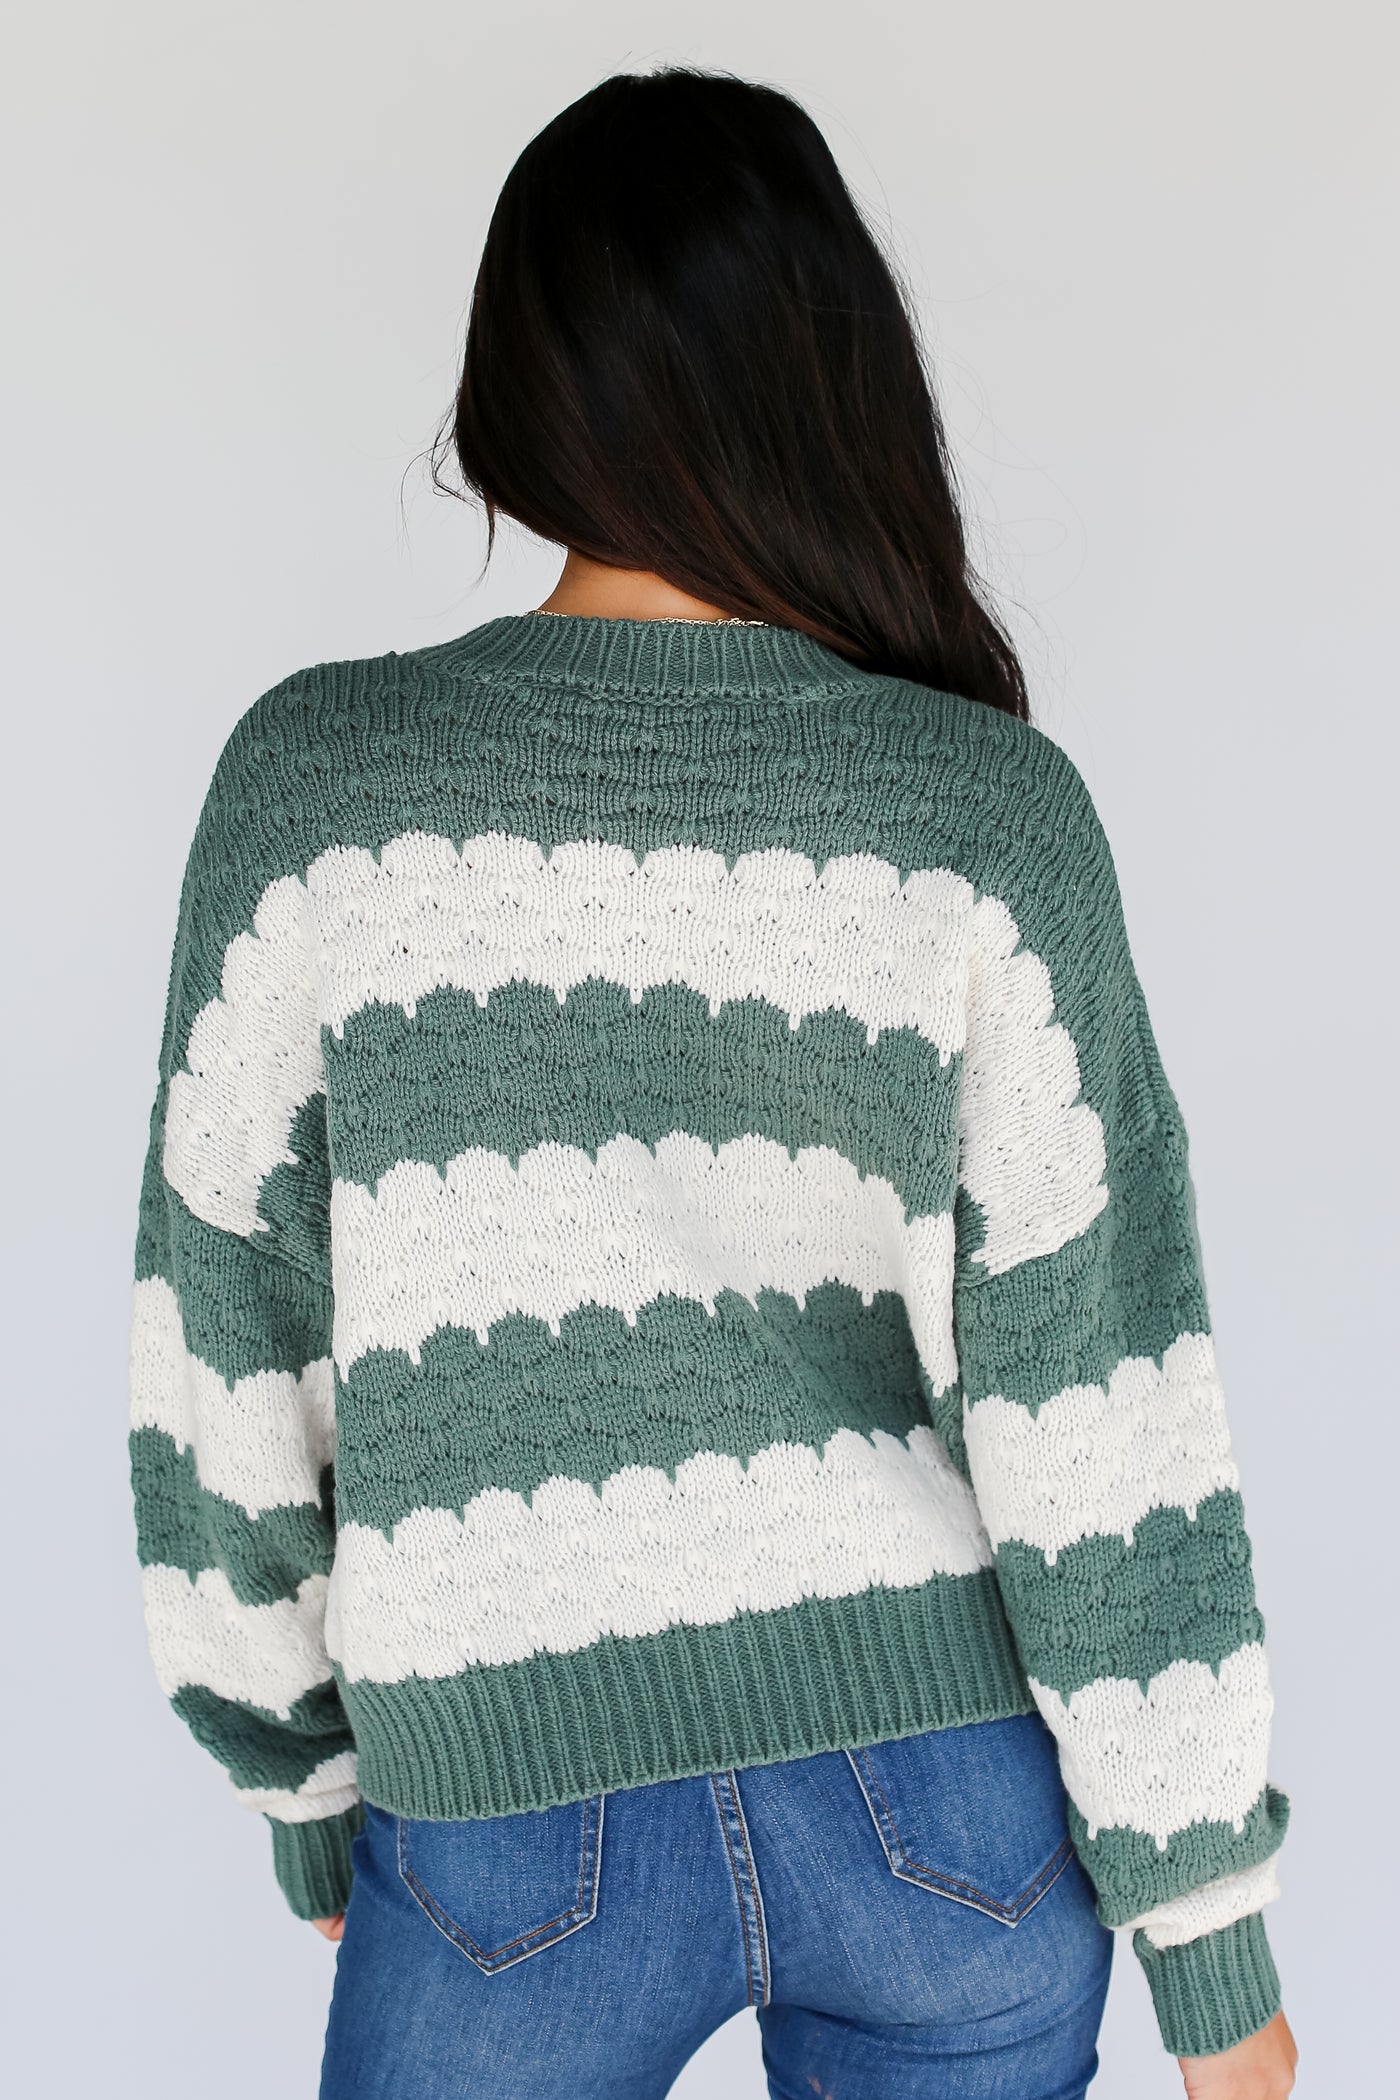 Green Striped Sweater on model